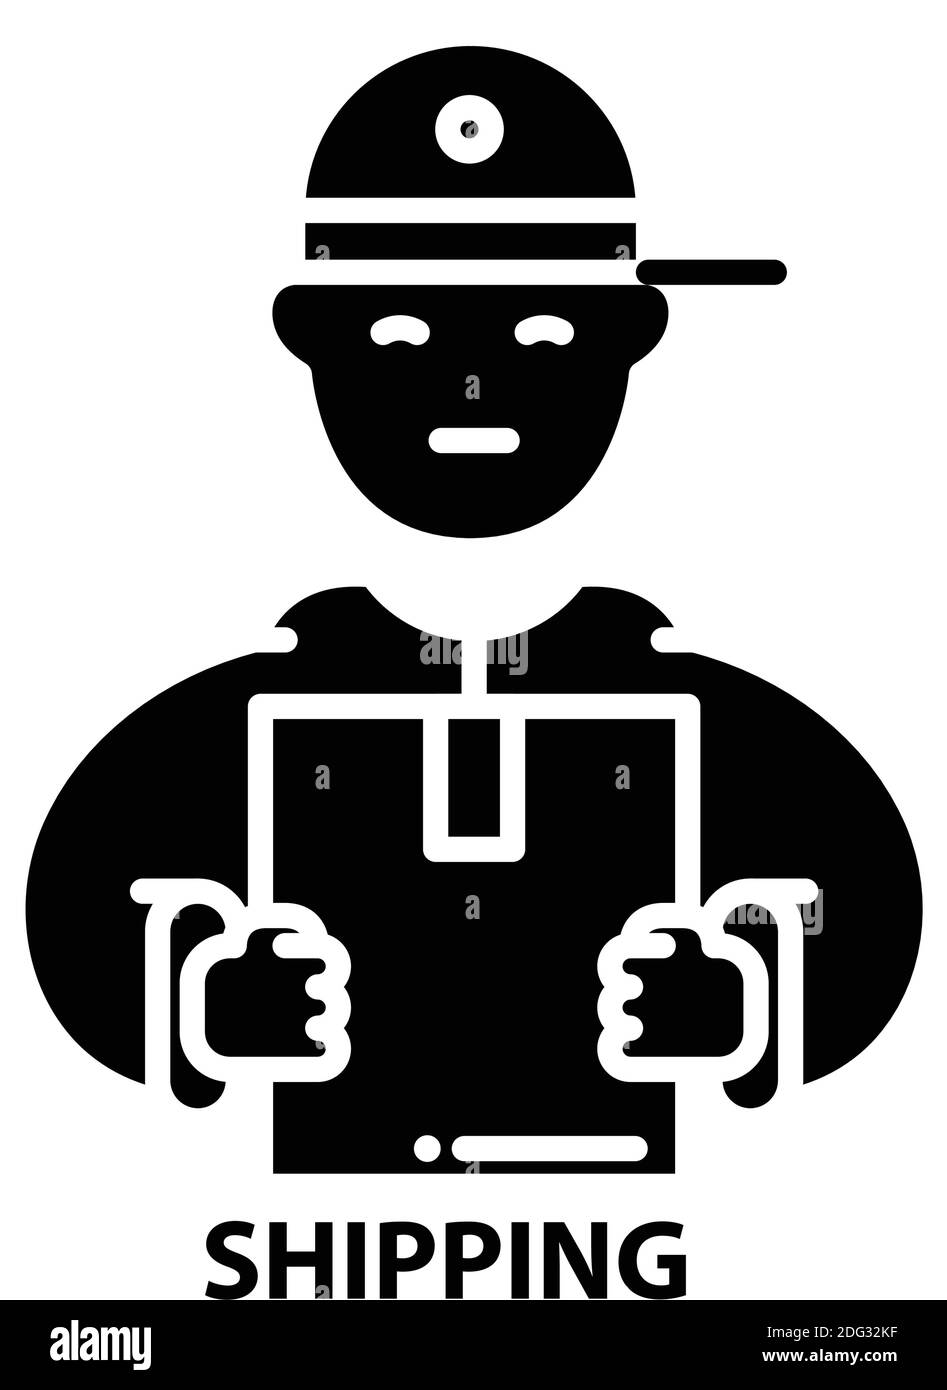 shipping icon, black vector sign with editable strokes, concept illustration Stock Vector